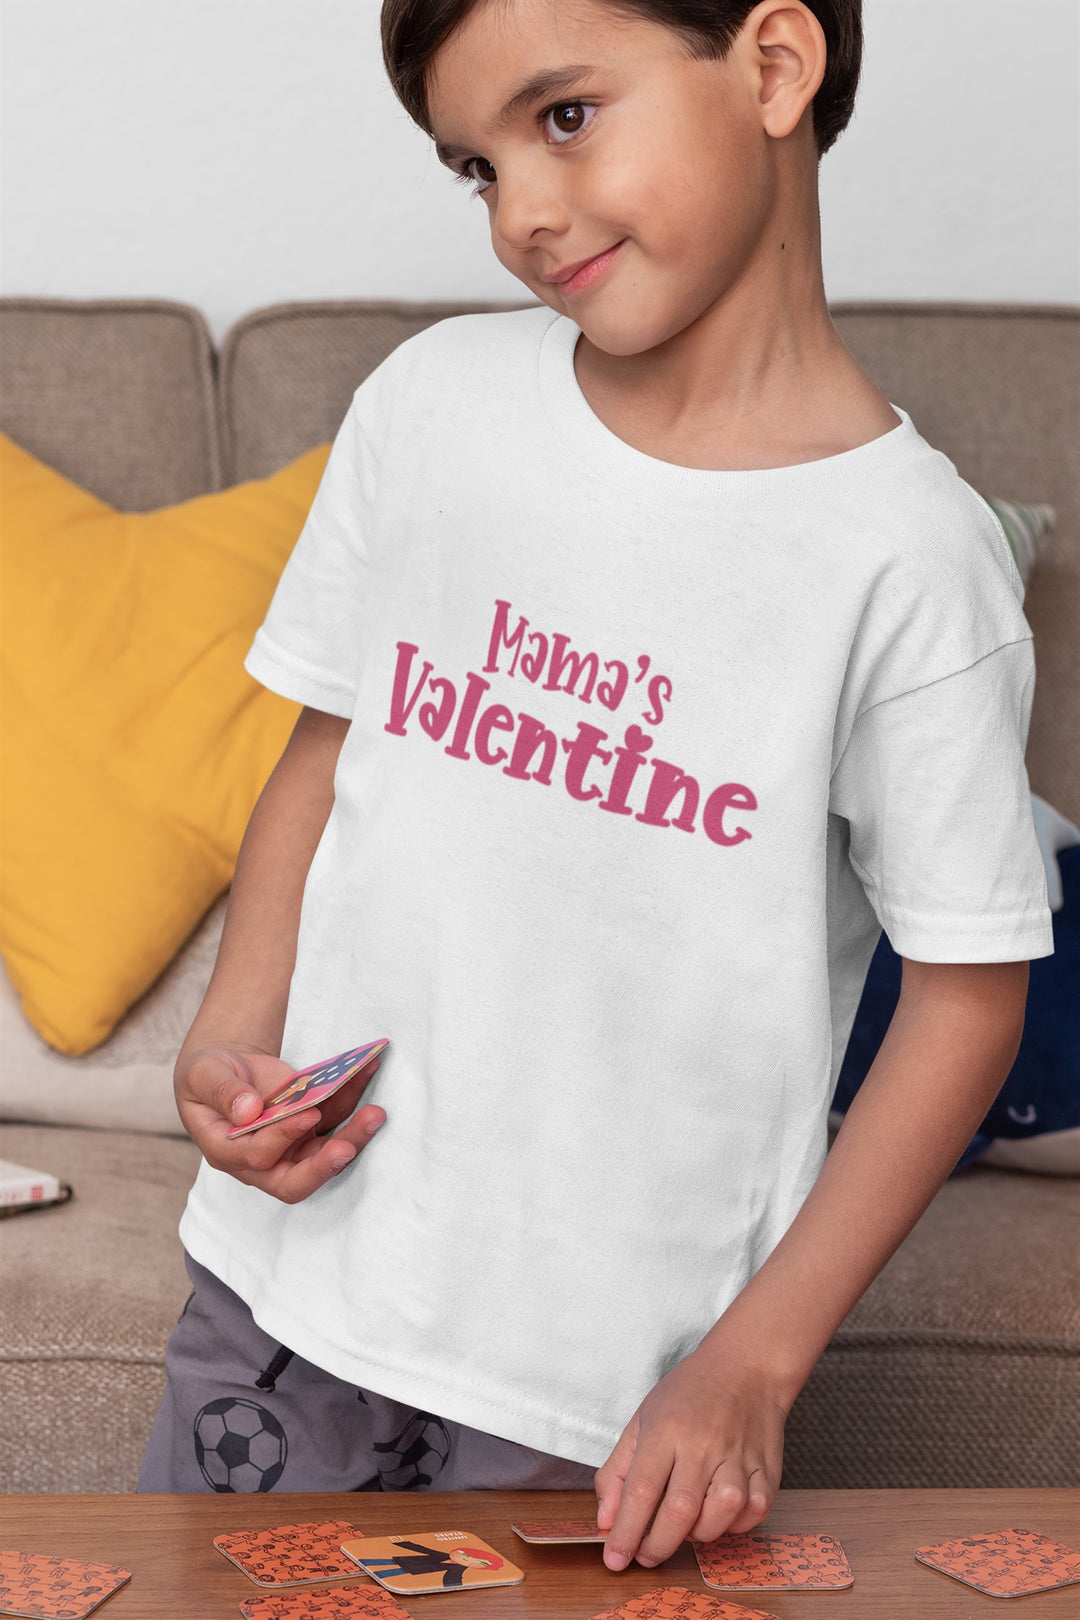 Mamas Valentine. Short Sleeve T Shirt For Toddler And Kids. - TeesForToddlersandKids -  t-shirt - holidays, Love - mamas-valentine-short-sleeve-t-shirt-for-toddler-and-kids